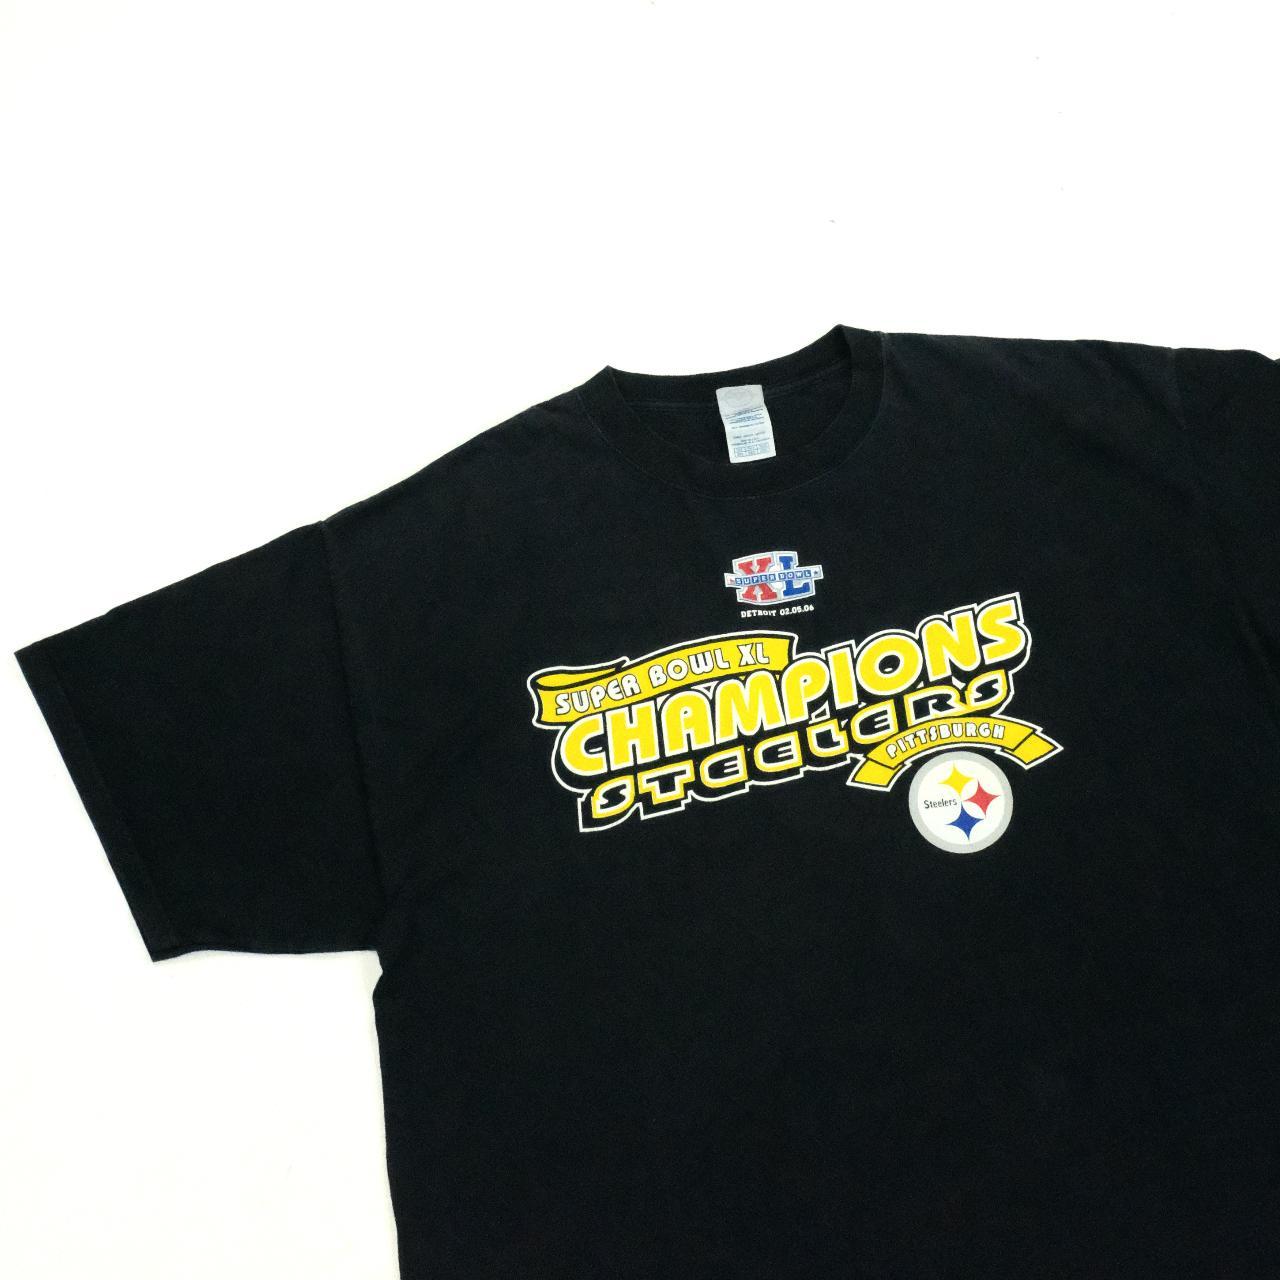 Steelers Super Bowl Champions t-shirt